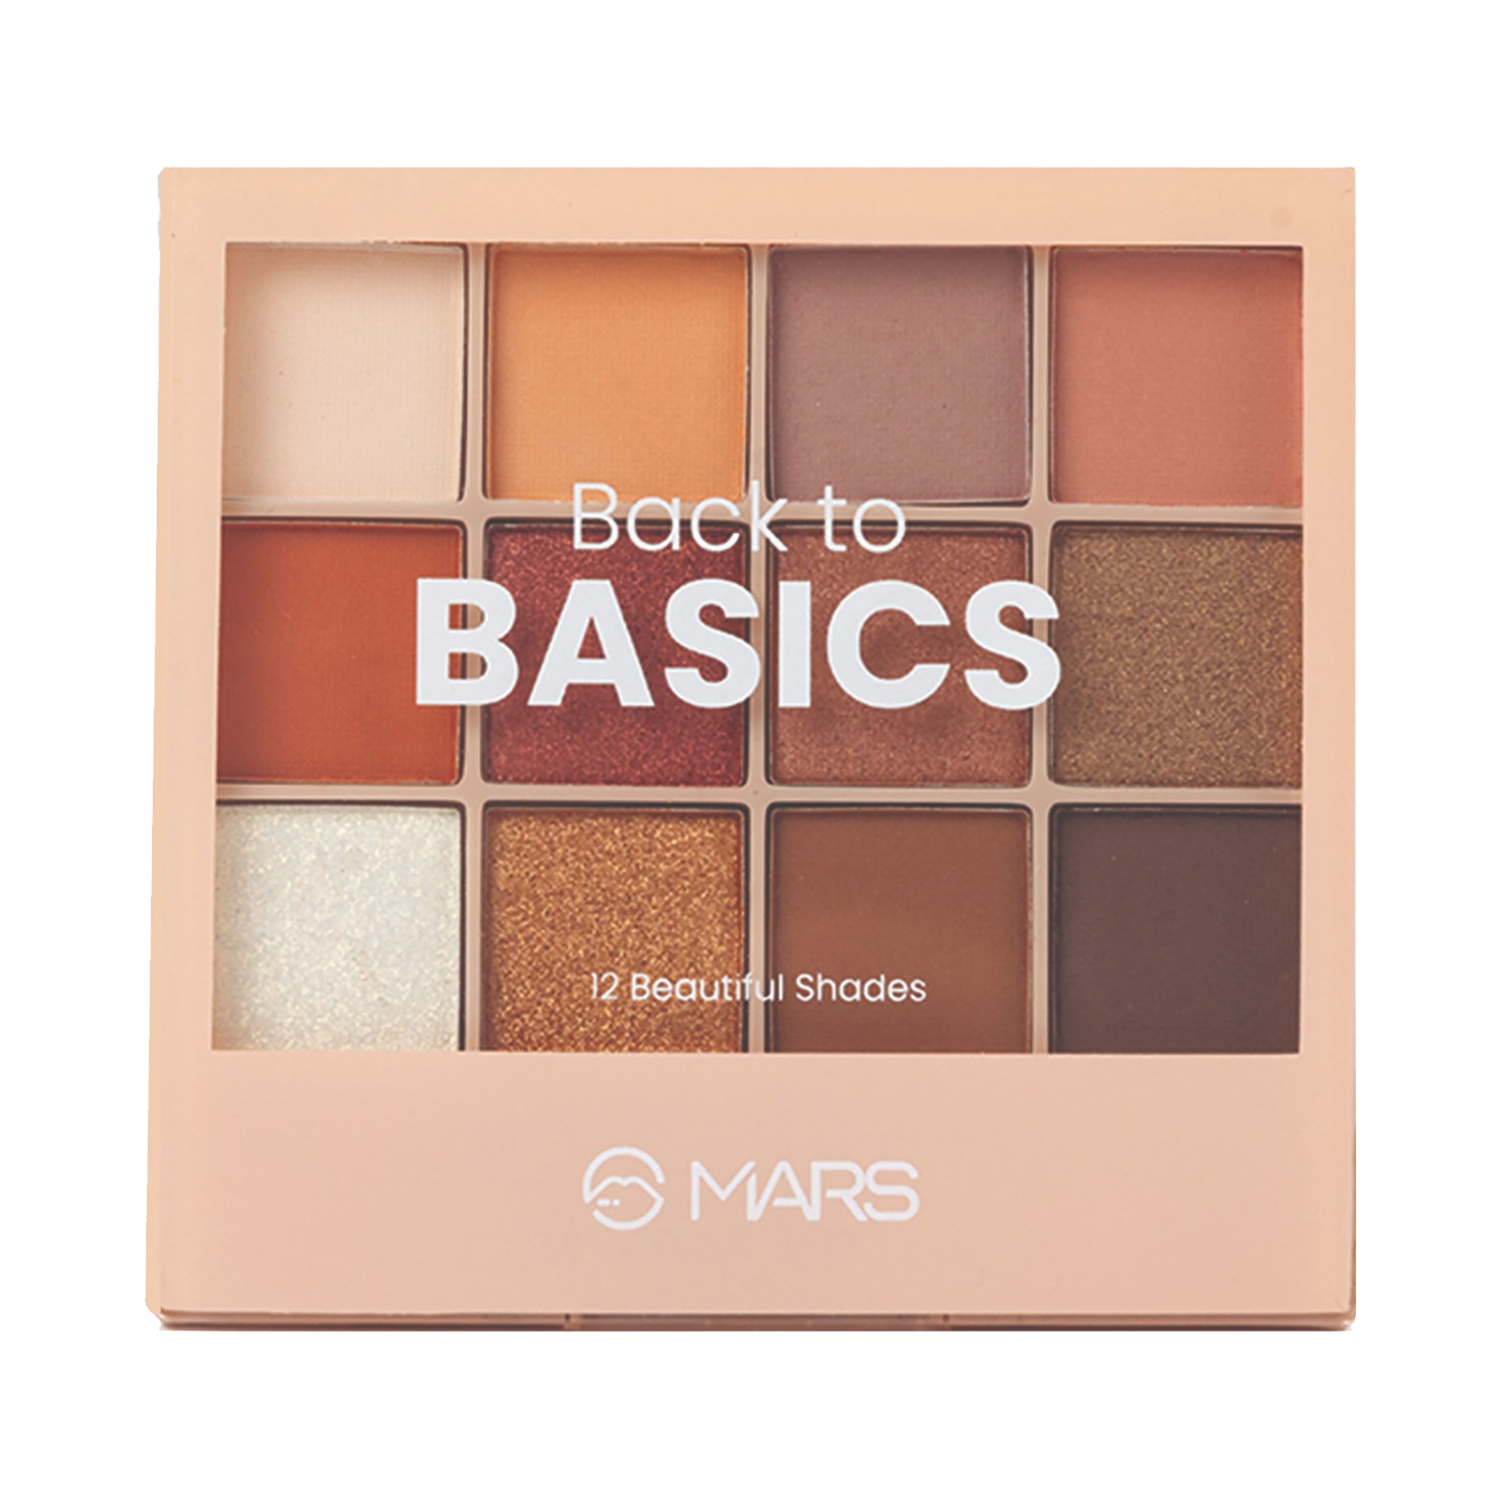 MARS Back To Basics Eyeshadow Palette - 02 Shade (14.4g)